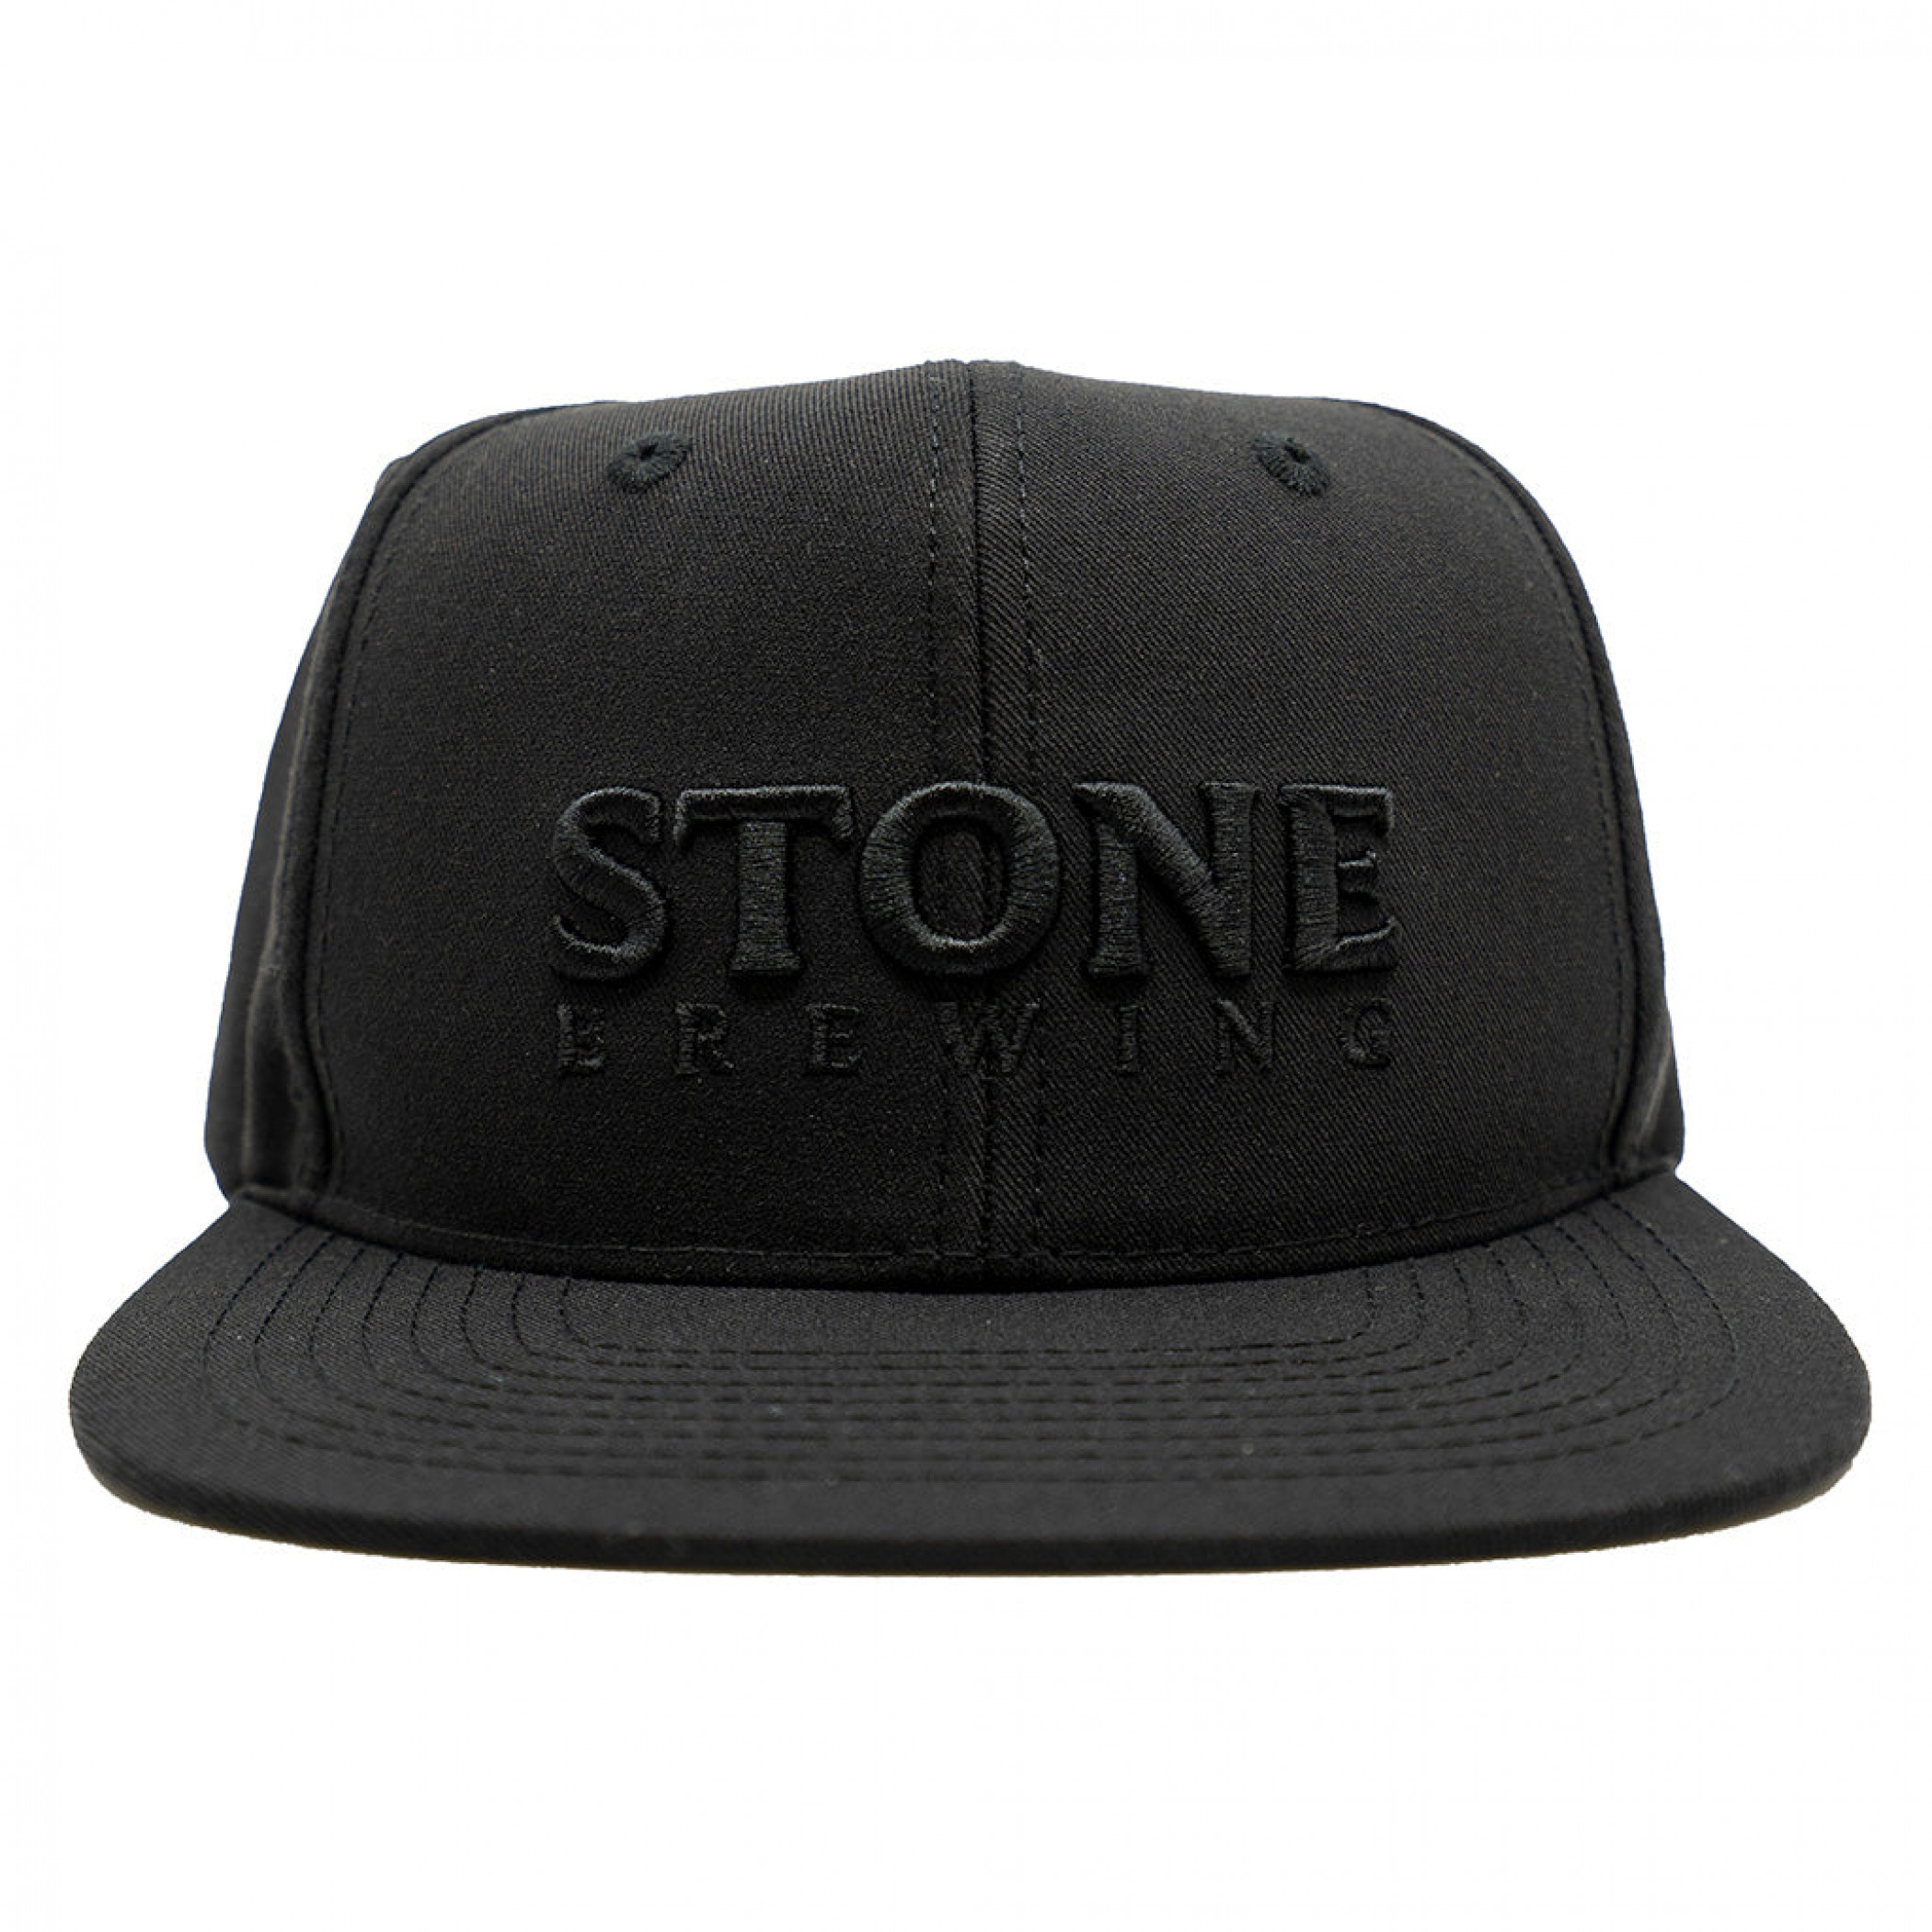 Stone Brewing Black on Black Flatbill Snapback Hat